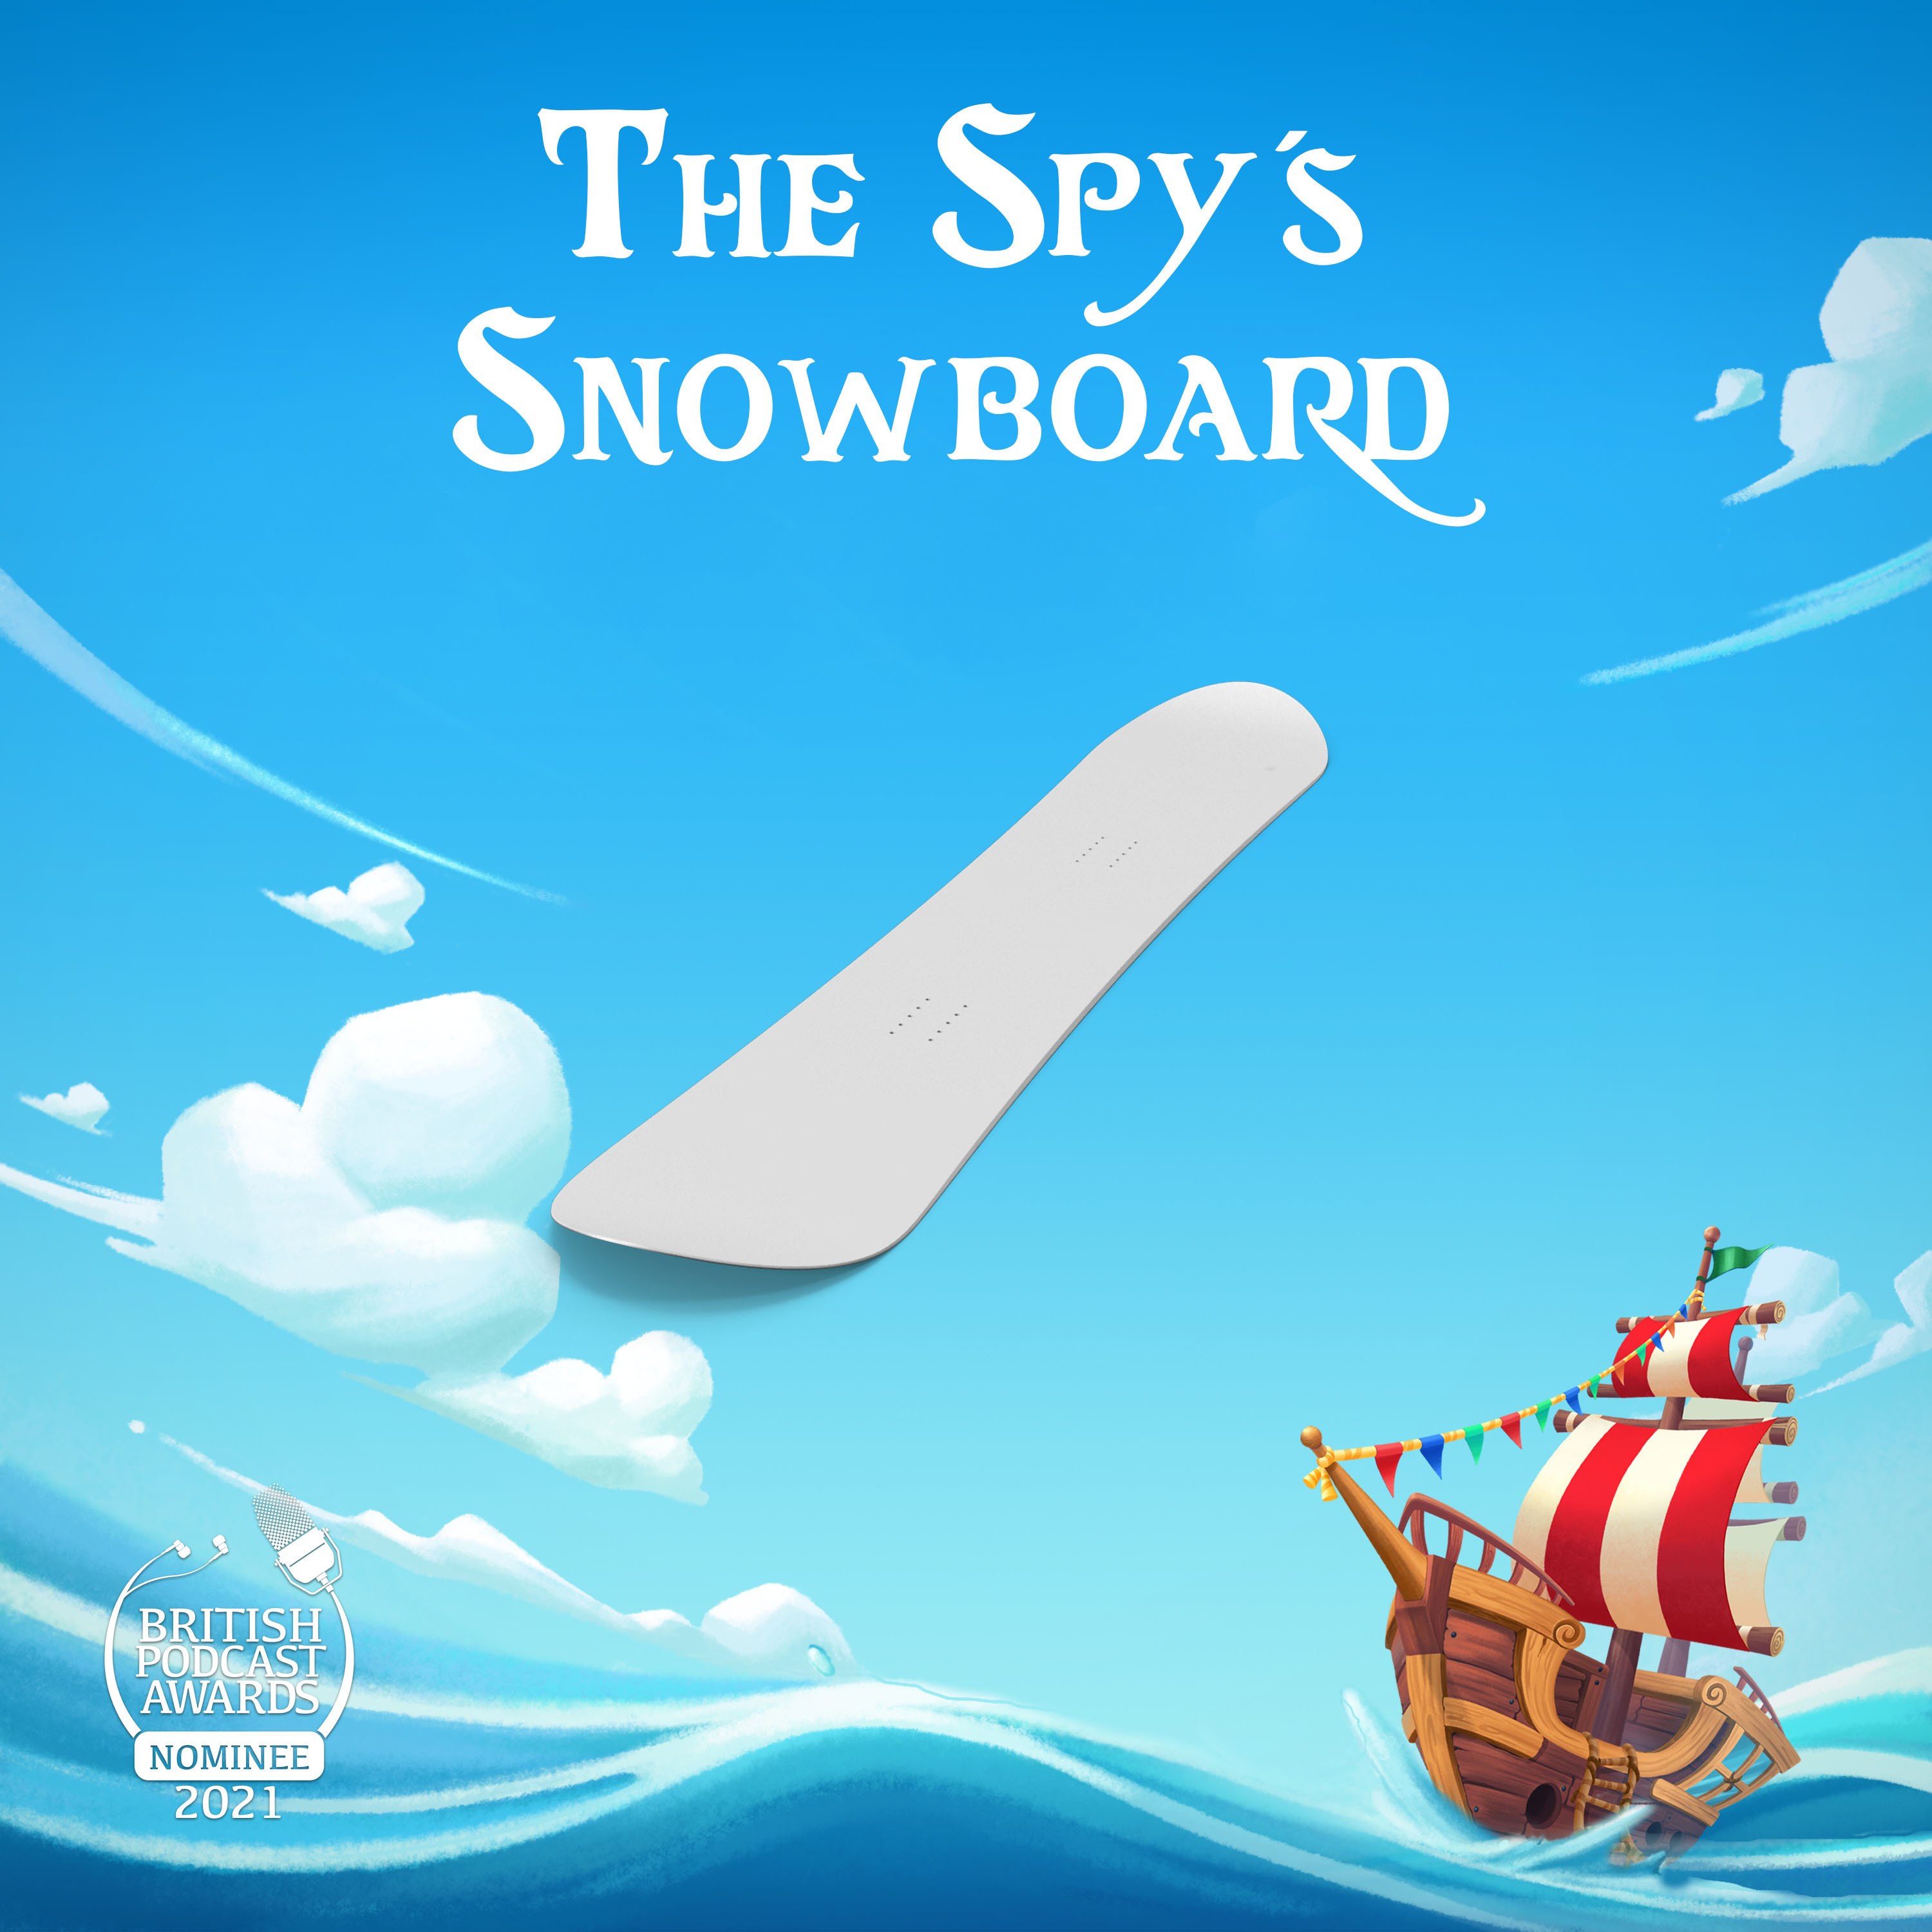 The Spy’s Snowboard